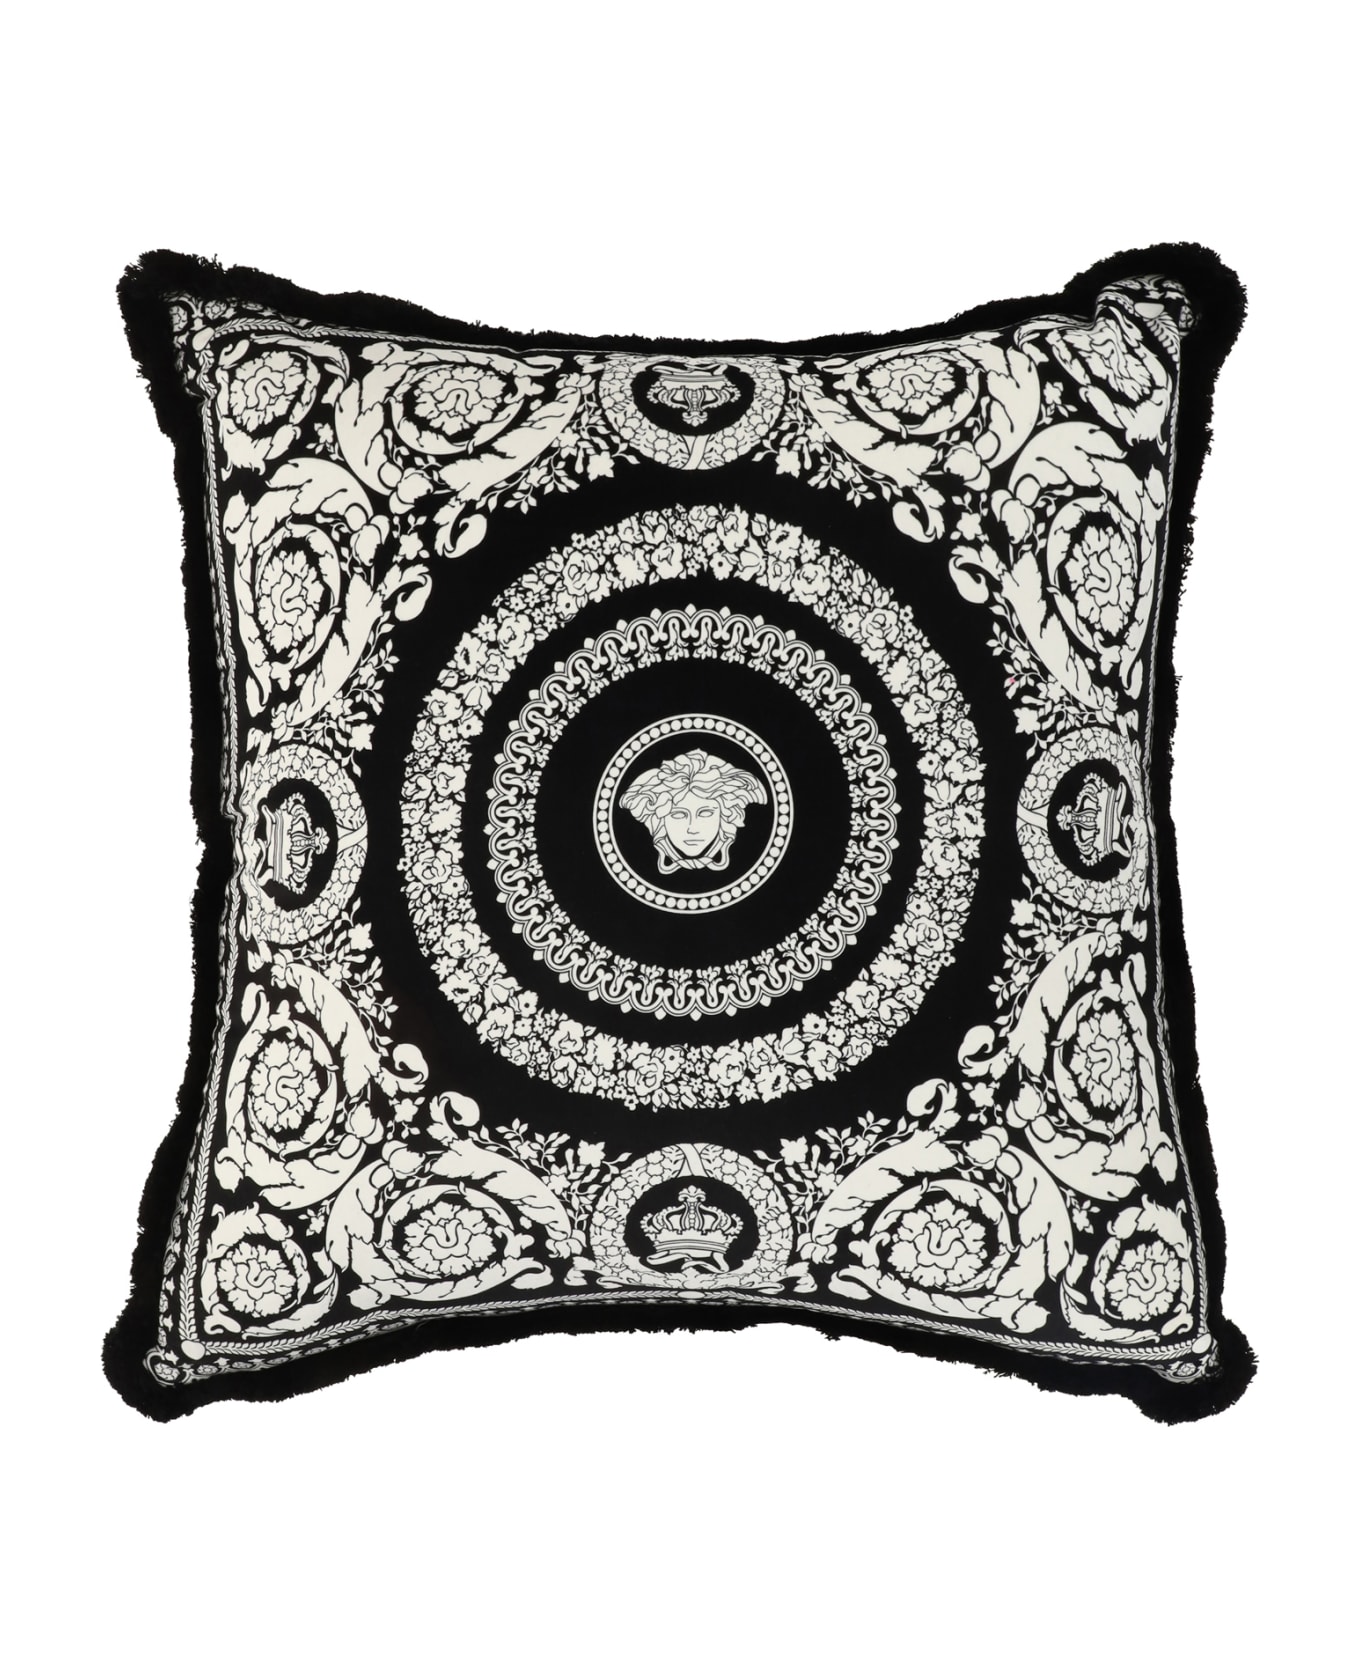 Versace Squared Pillow - Nero/bianco